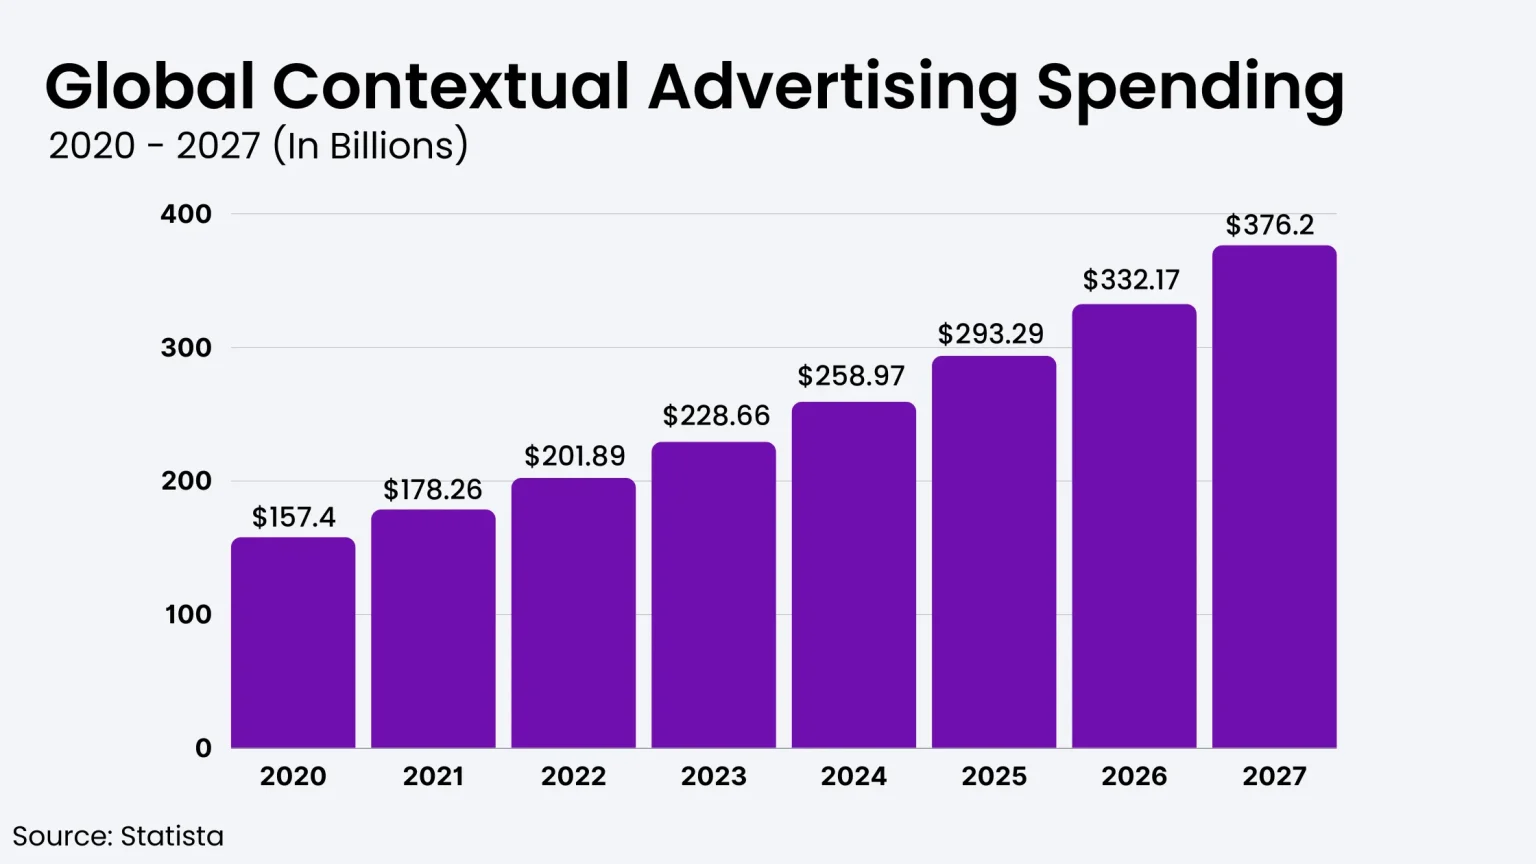 Global advertising spending with contextual targeting - Statista